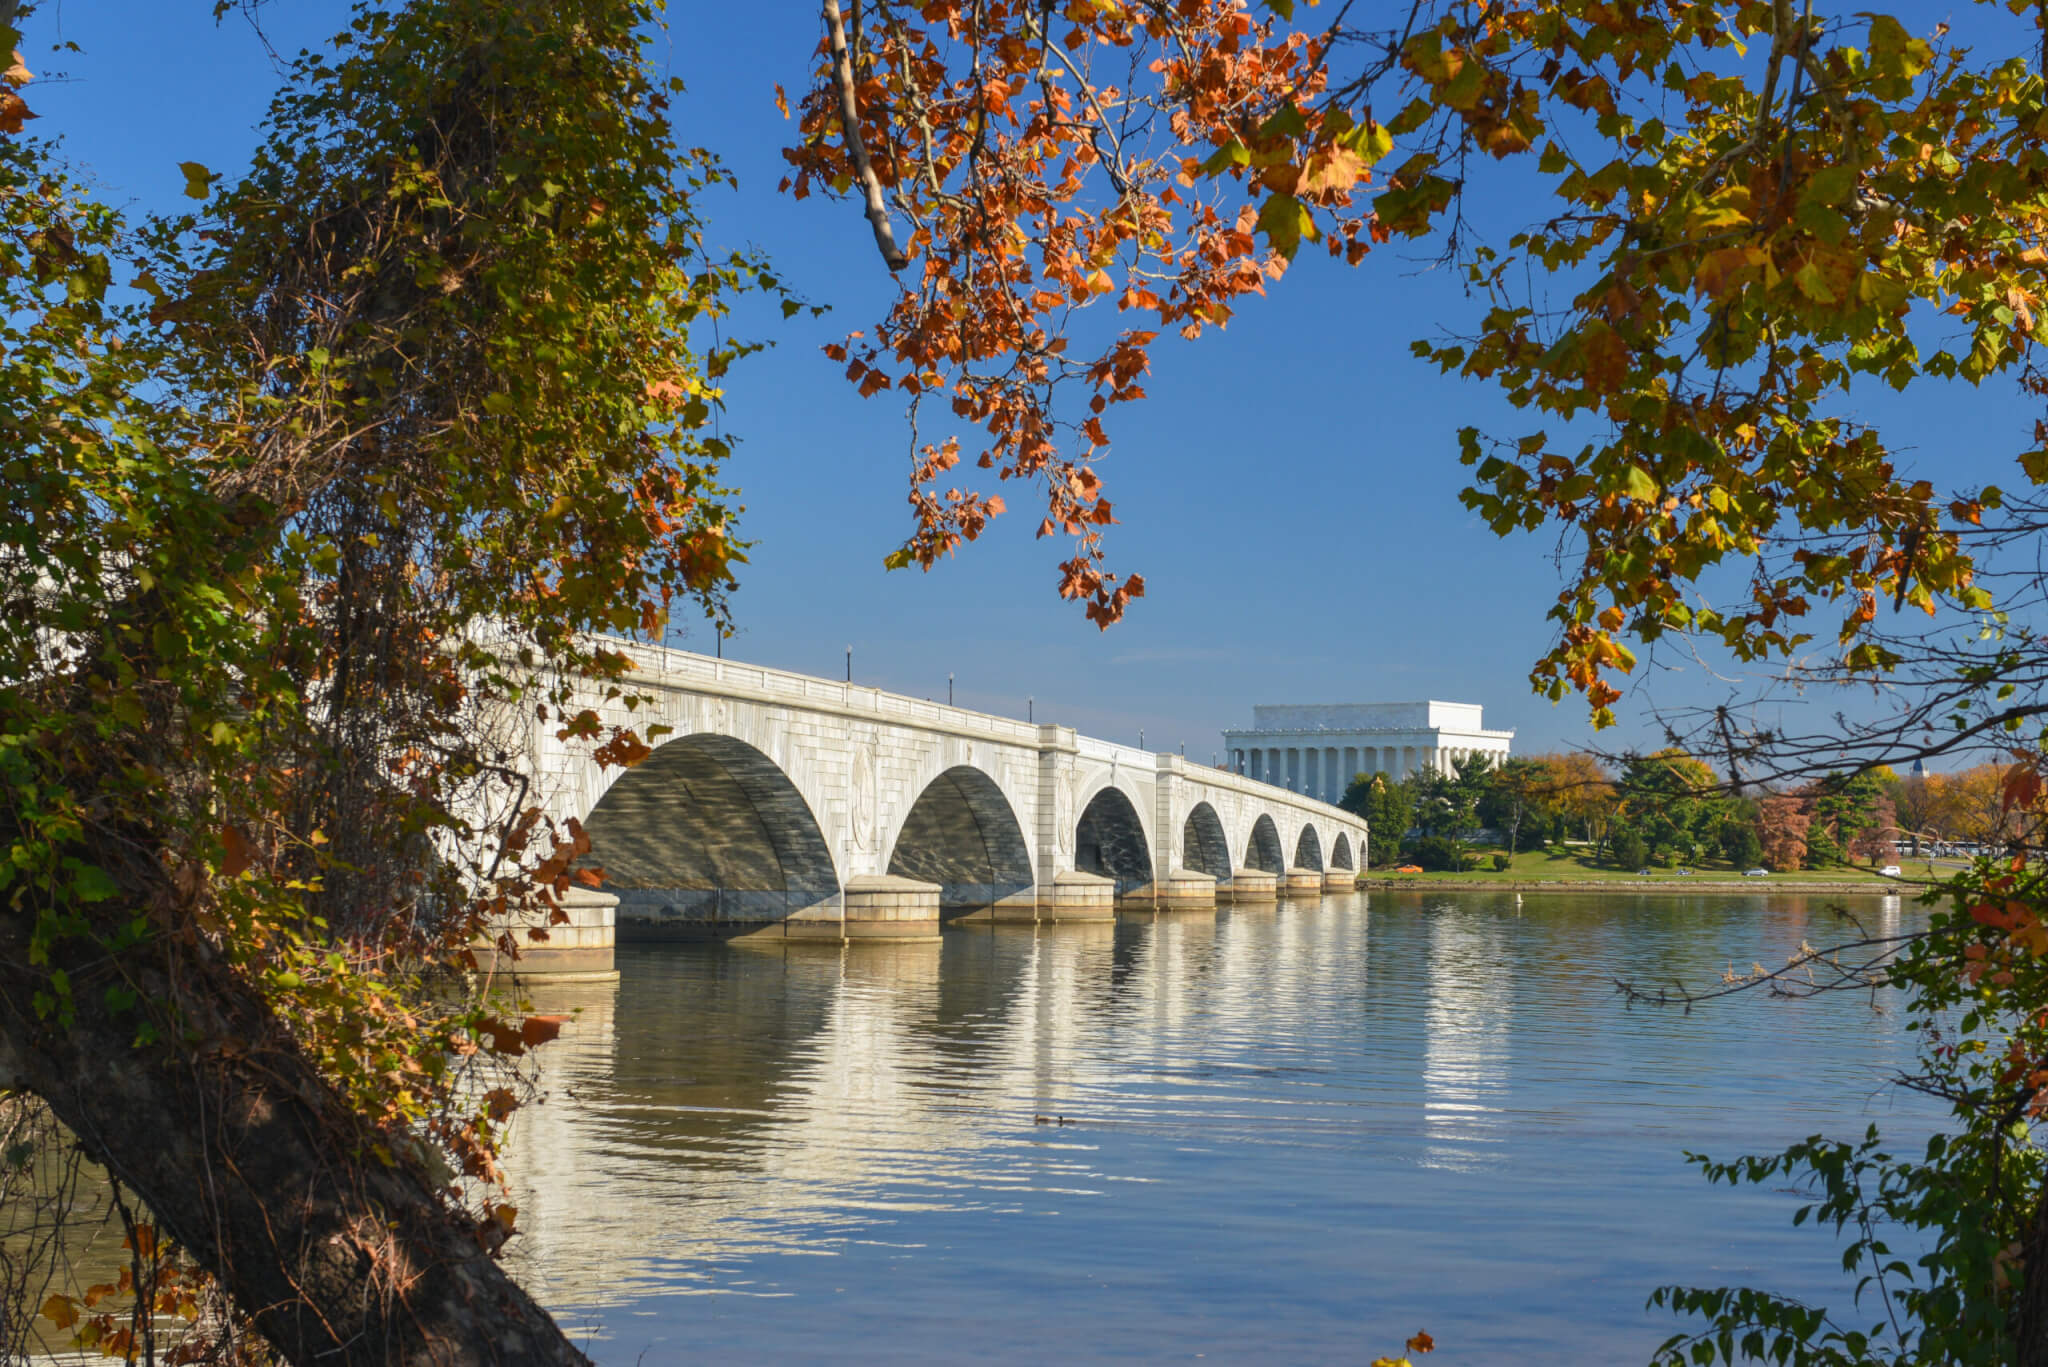 Washington D.C. in autumn foliage - Memorial Bridge and Potomac Rİver